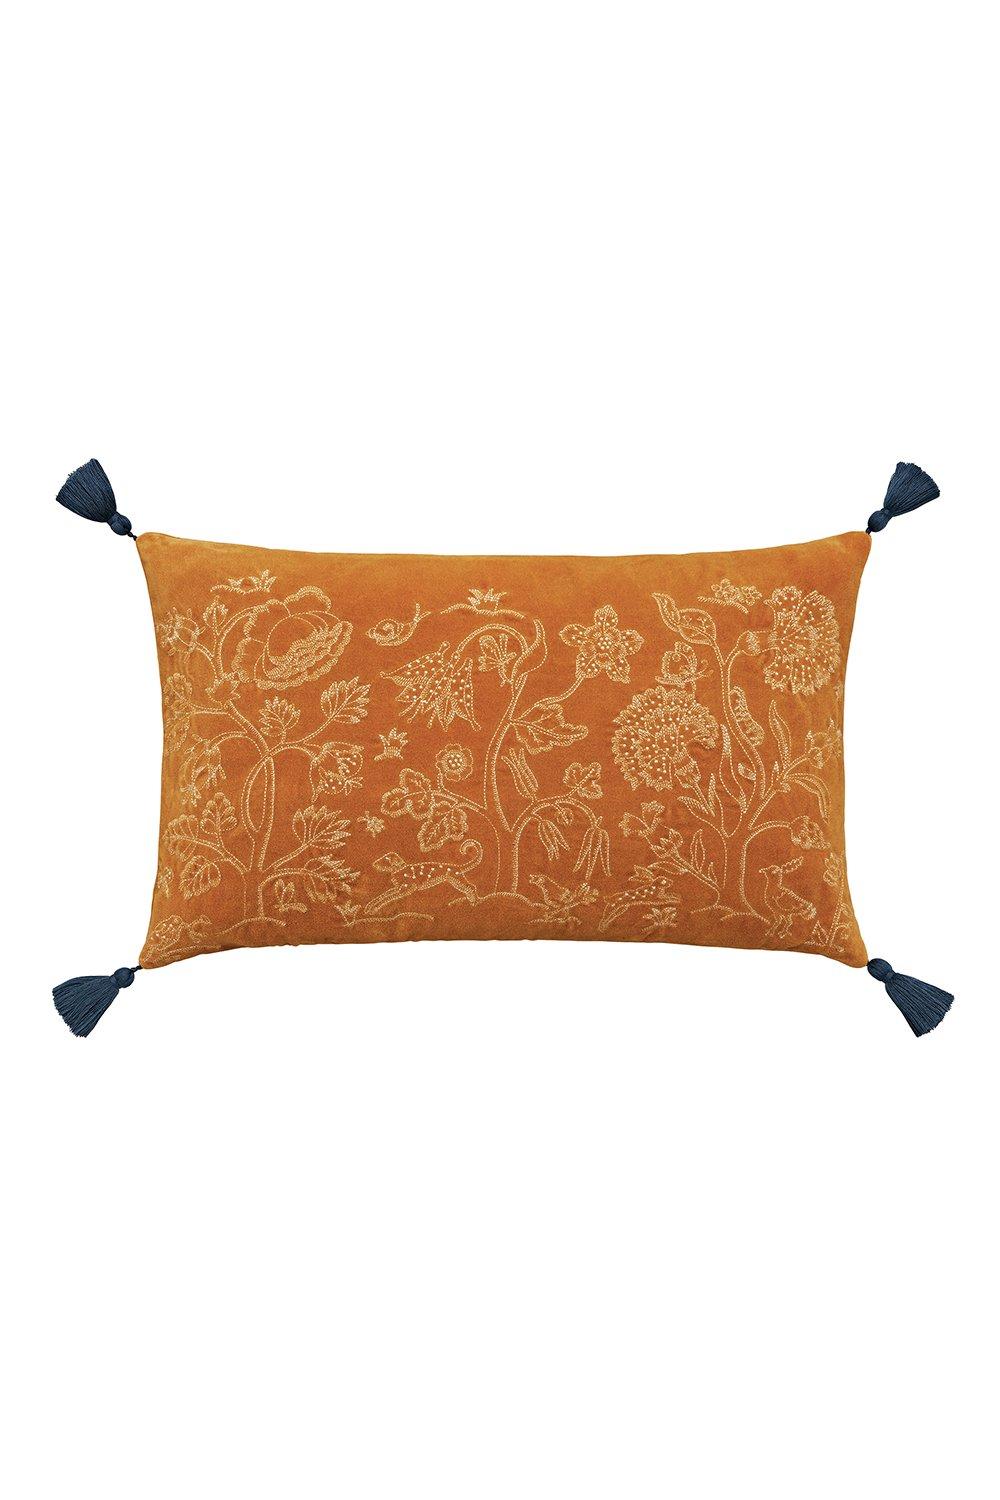 'Honeysuckle & Tulip' Cushion 50X30cm